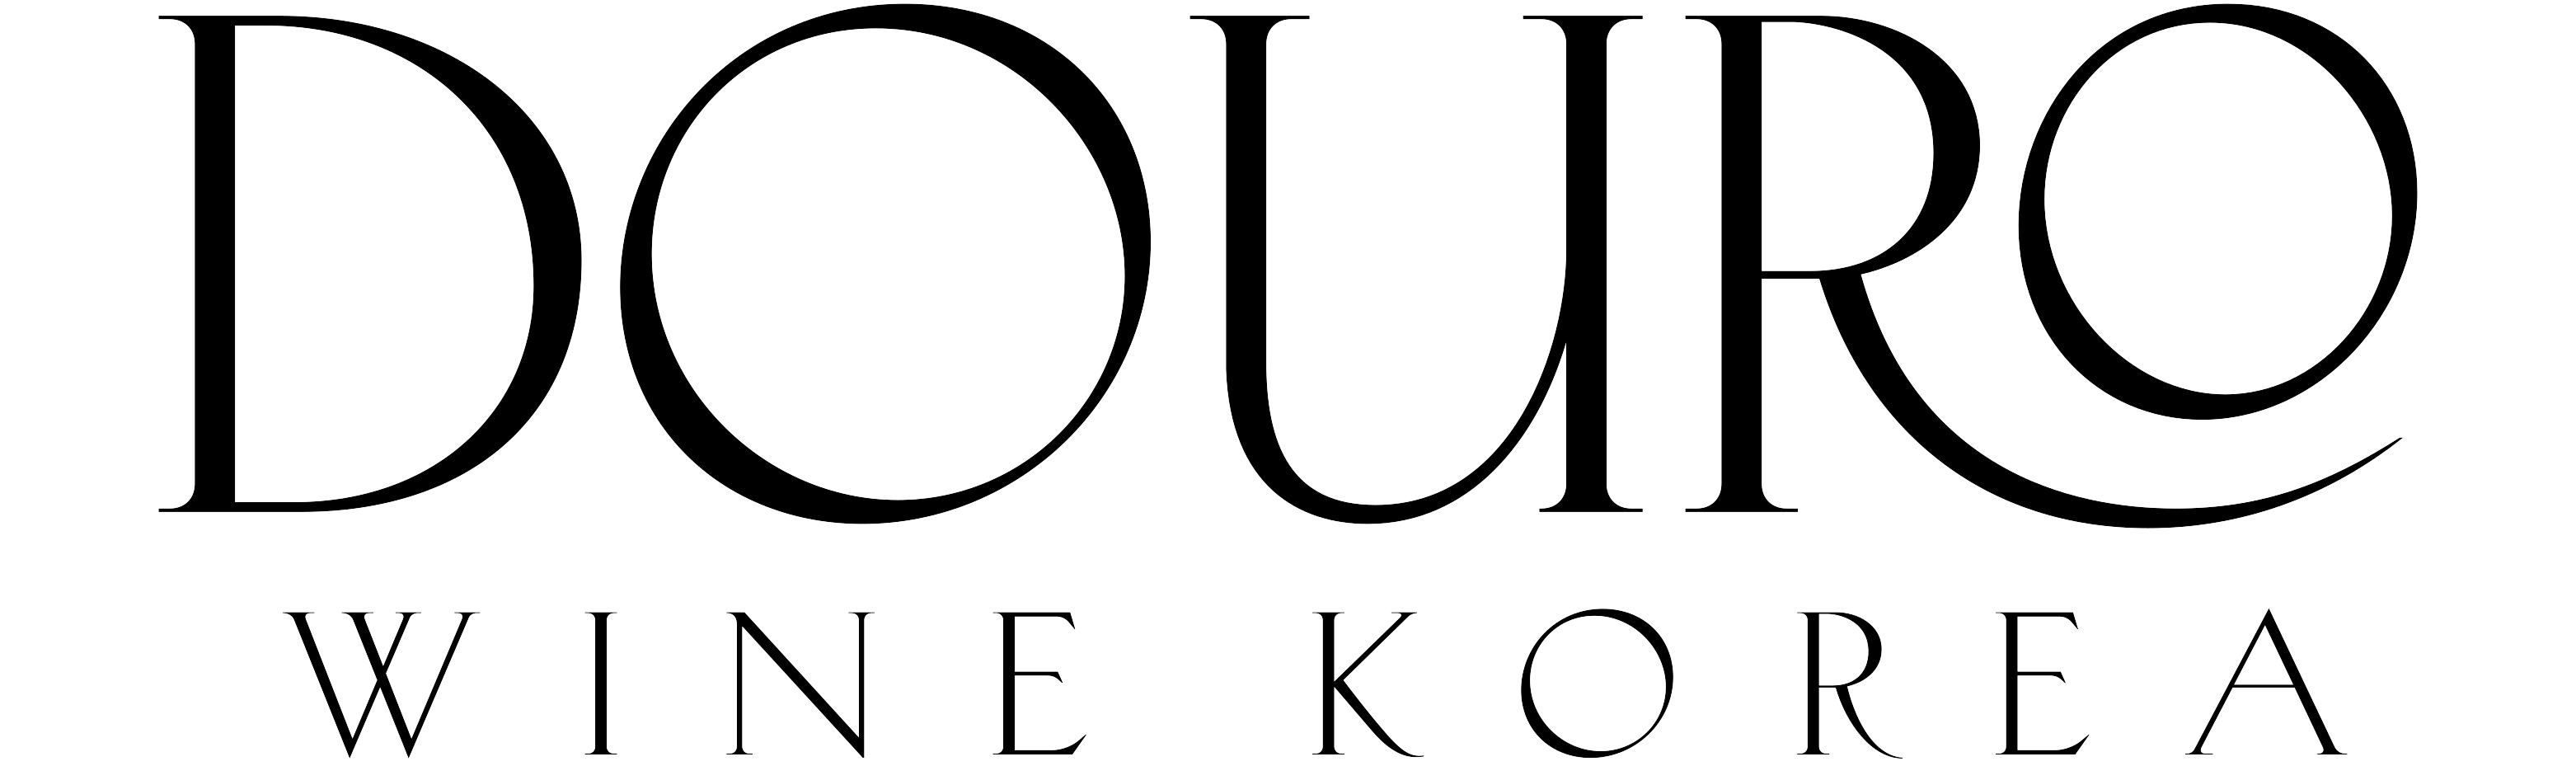 dark frisco logo